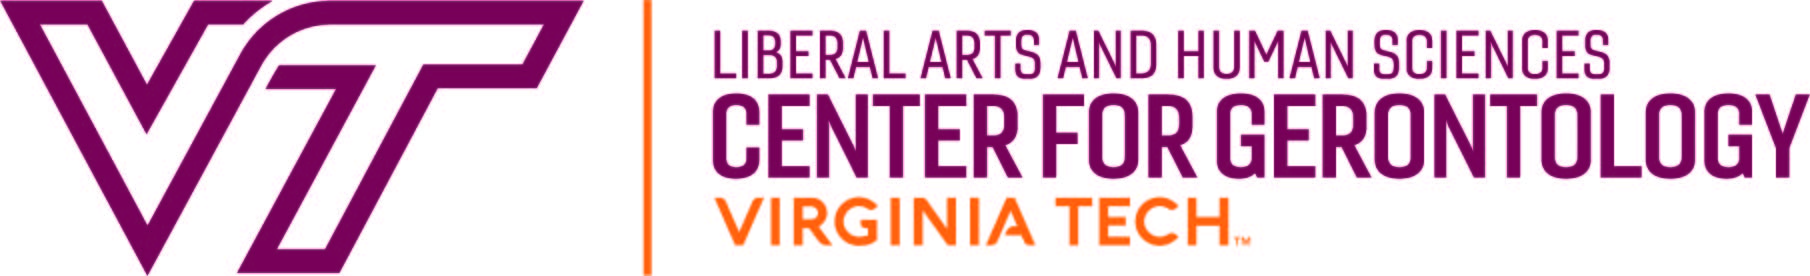 Virginia Tech Liberal Arts and Human Sciences Center for Gerontology